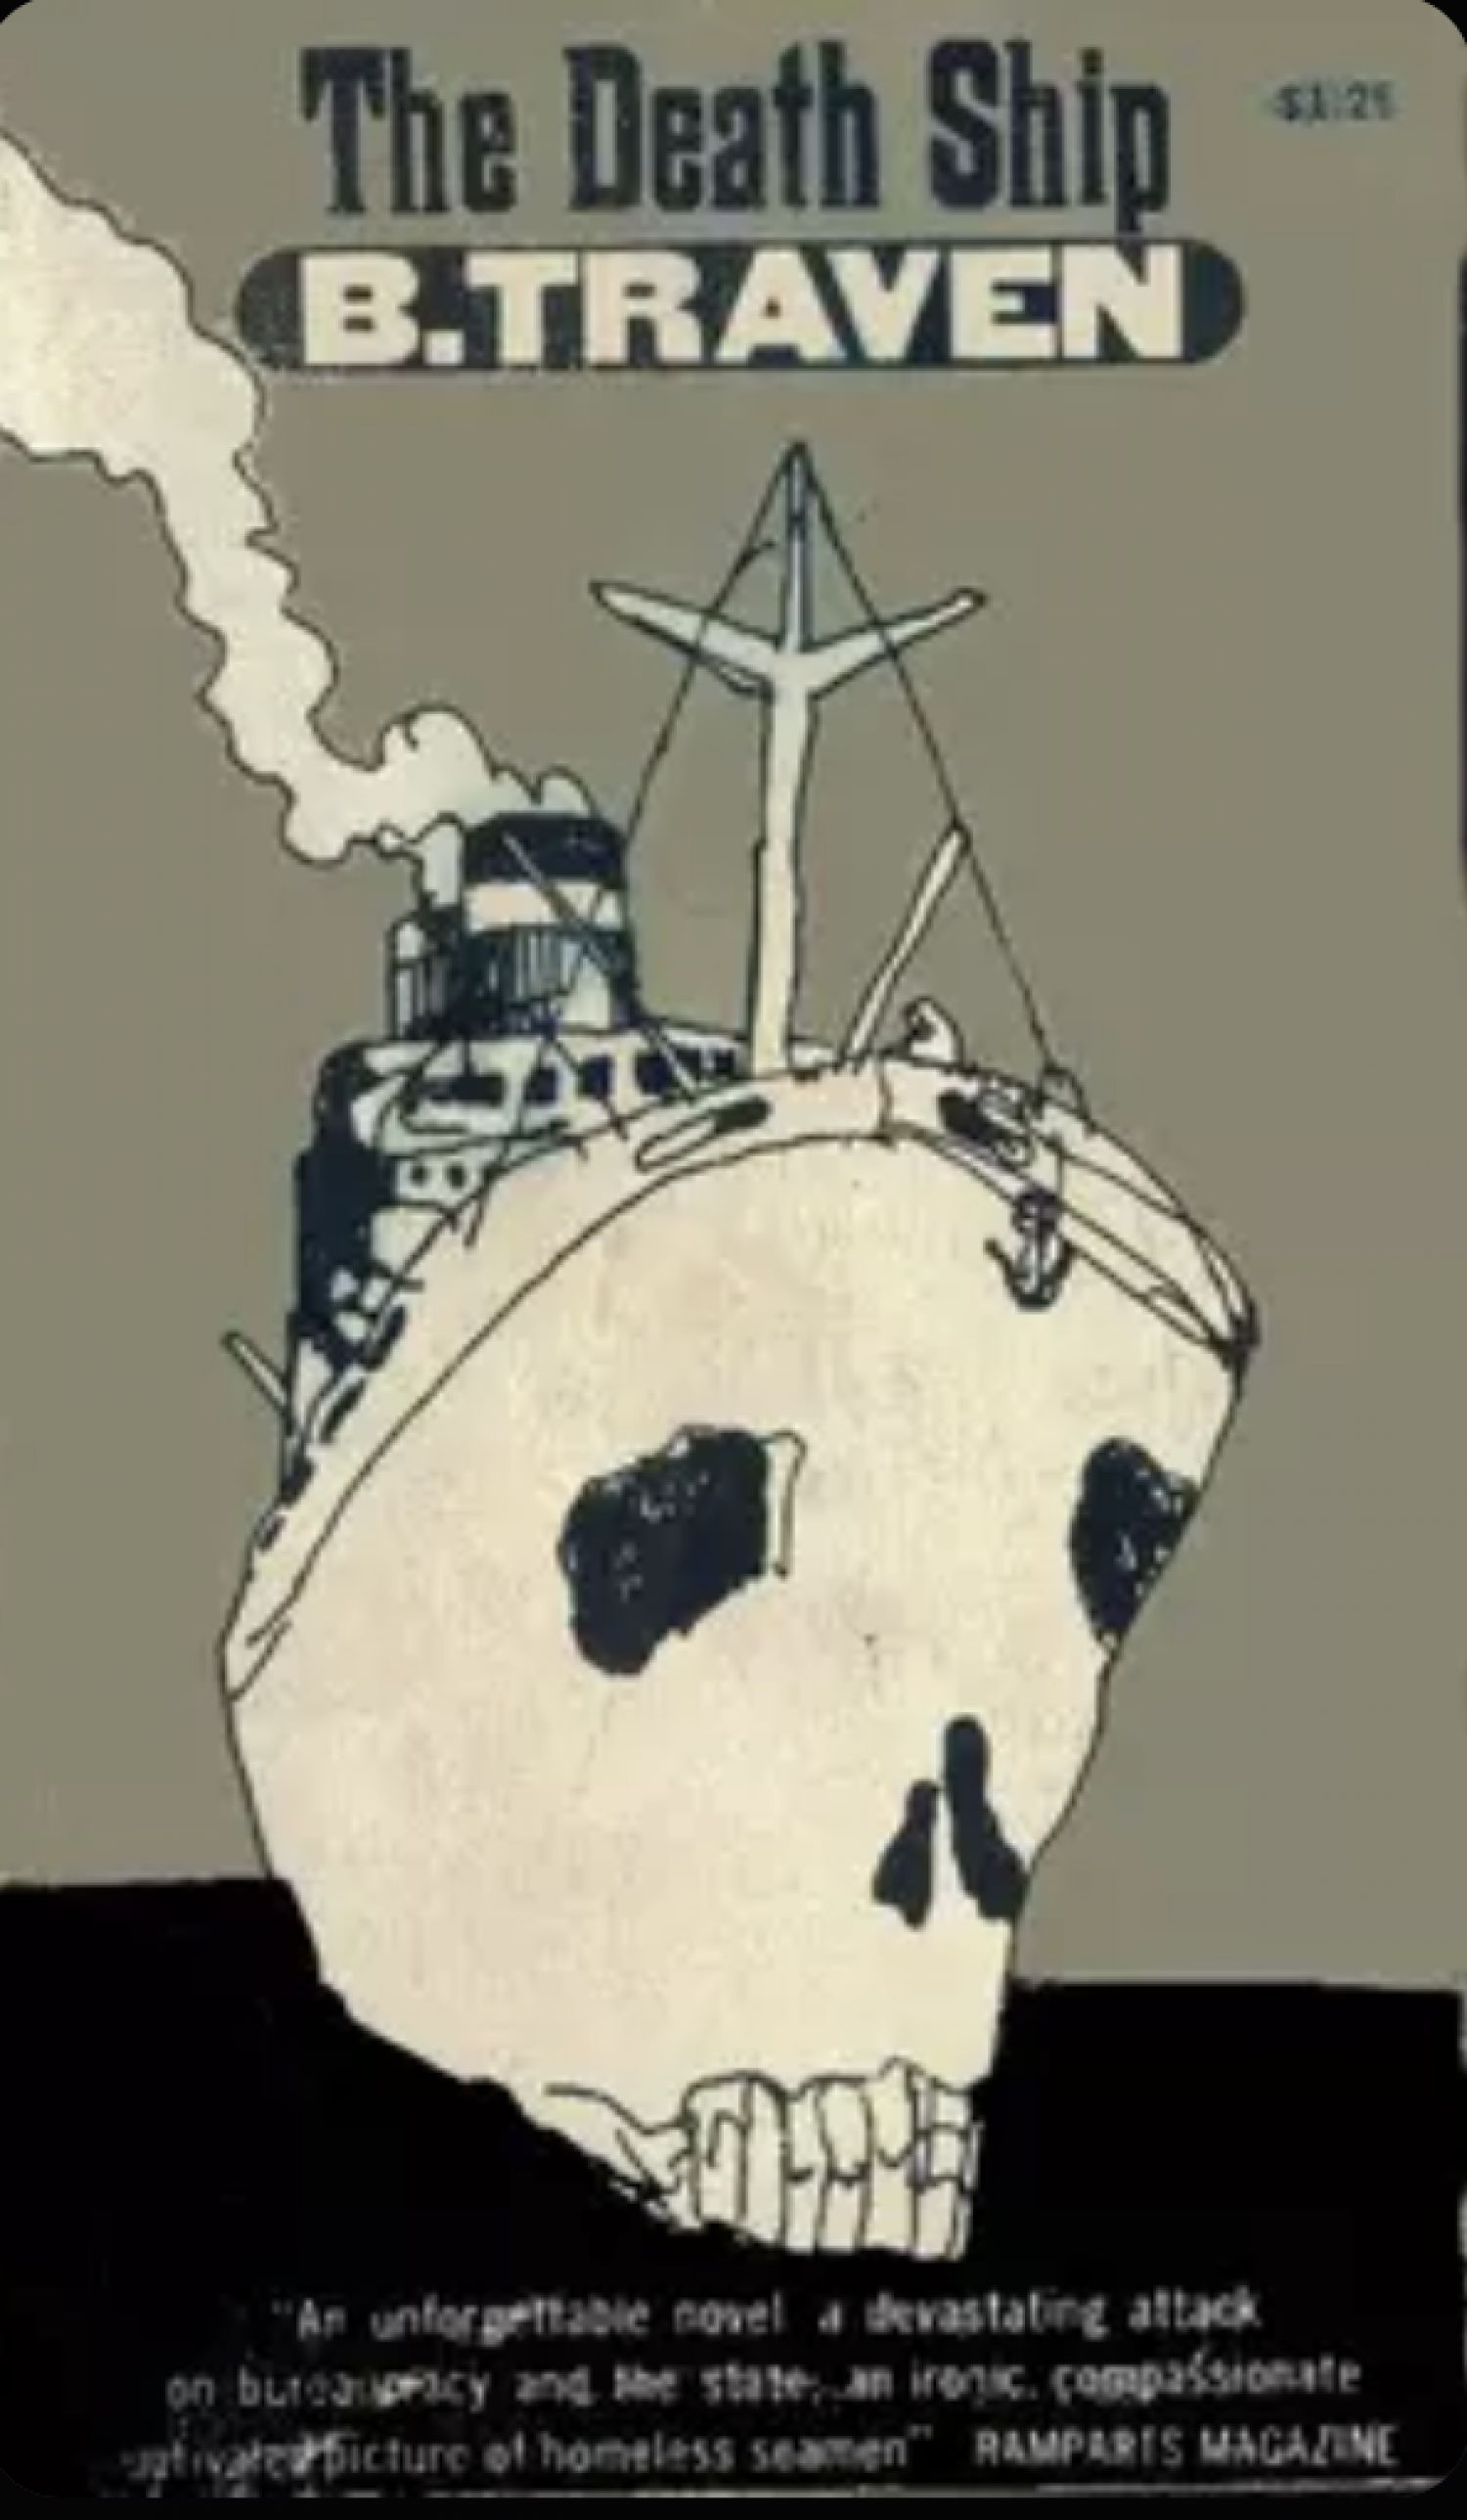 B. Traven, The Death Ship, 1926